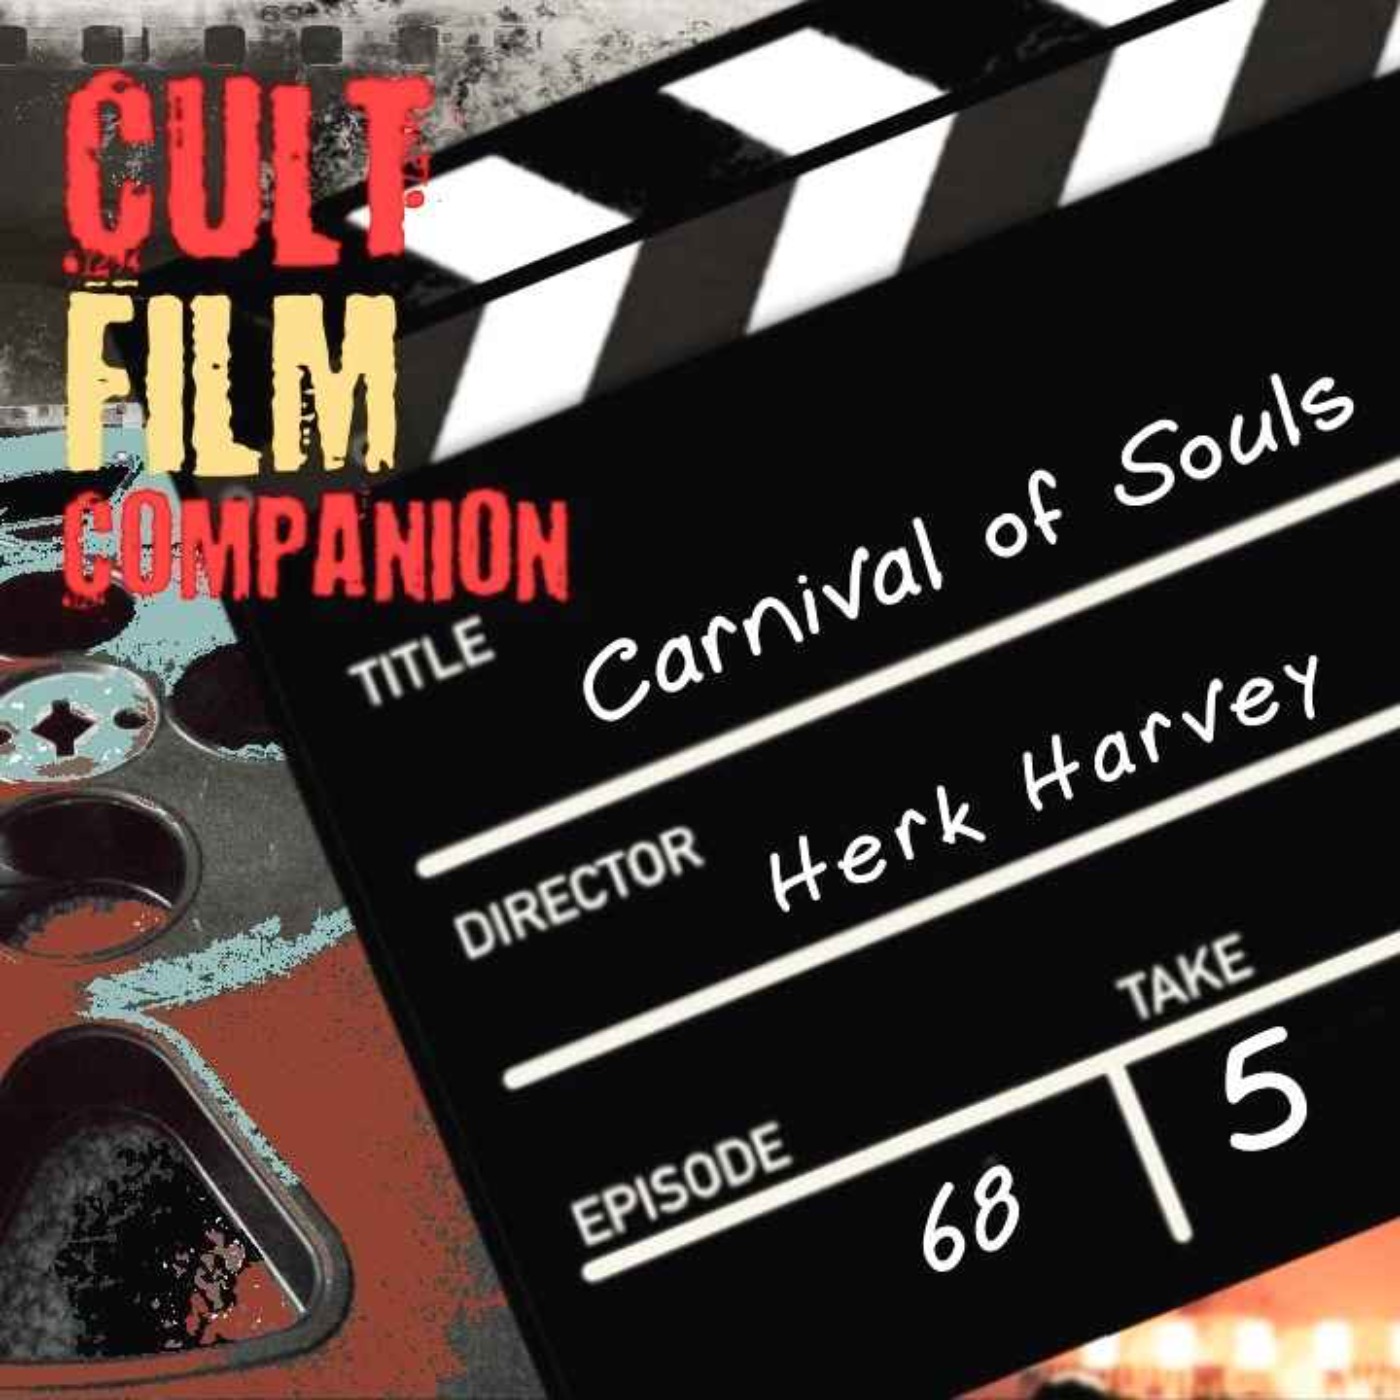 Ep. 68 Carnival of Souls directed by Herk Harvey